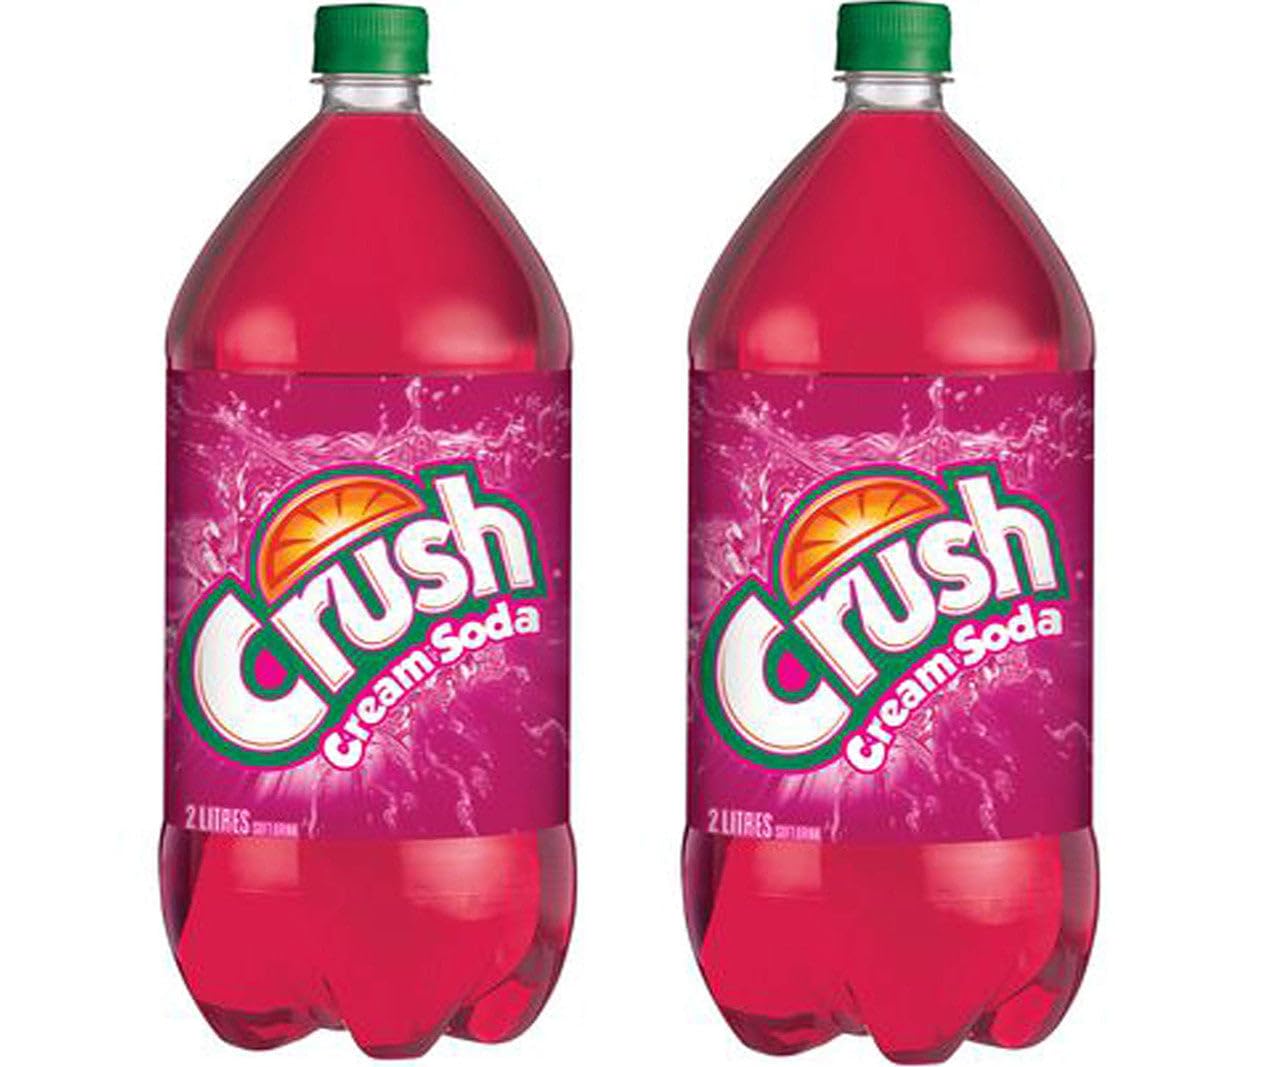 Crush Cream Soda Soft Drink 2 Bottles 2L / 67.6oz Each (Shipped from Canada)